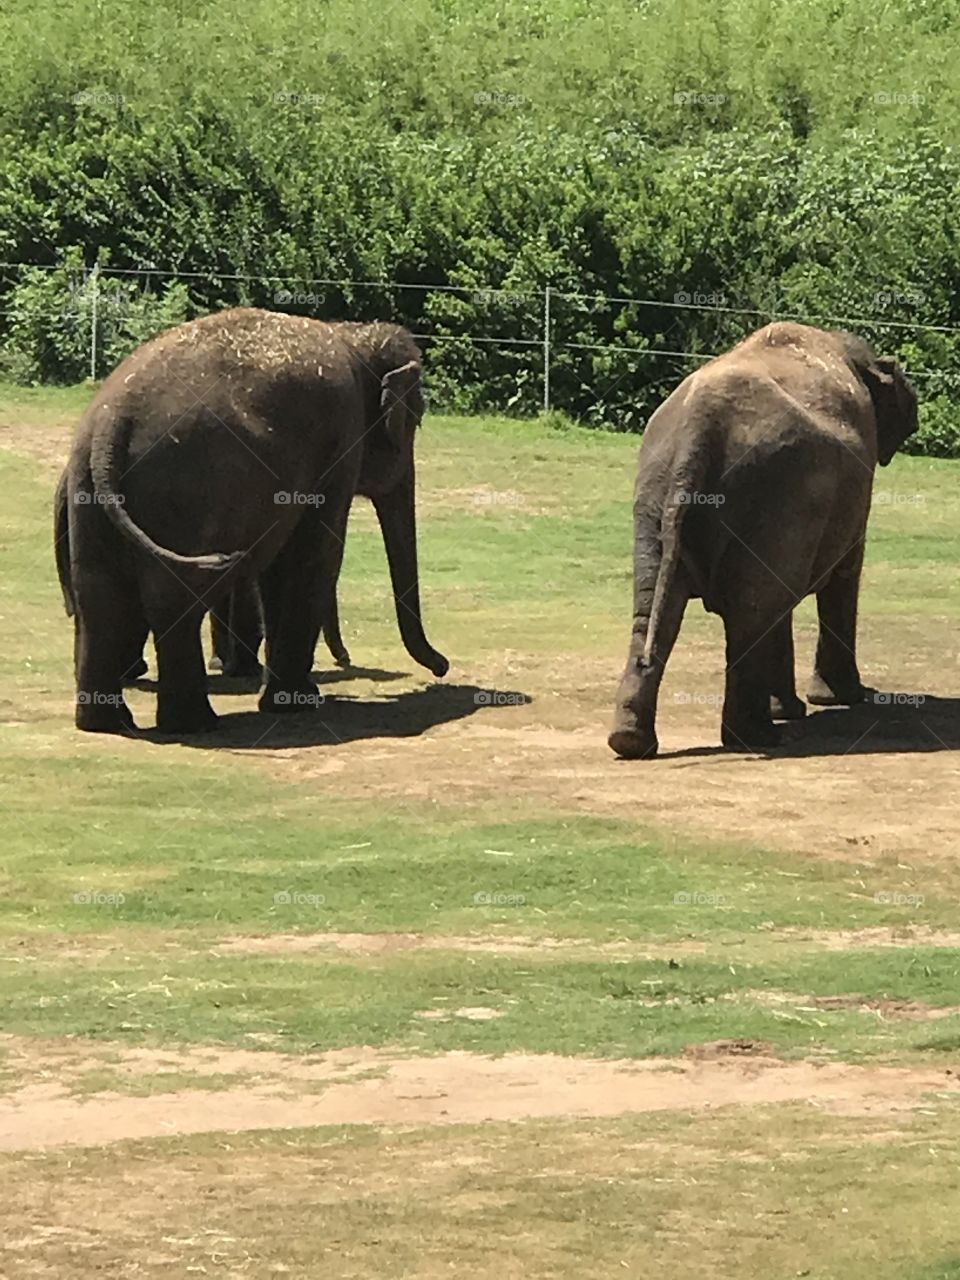 Okc zoo elephants 